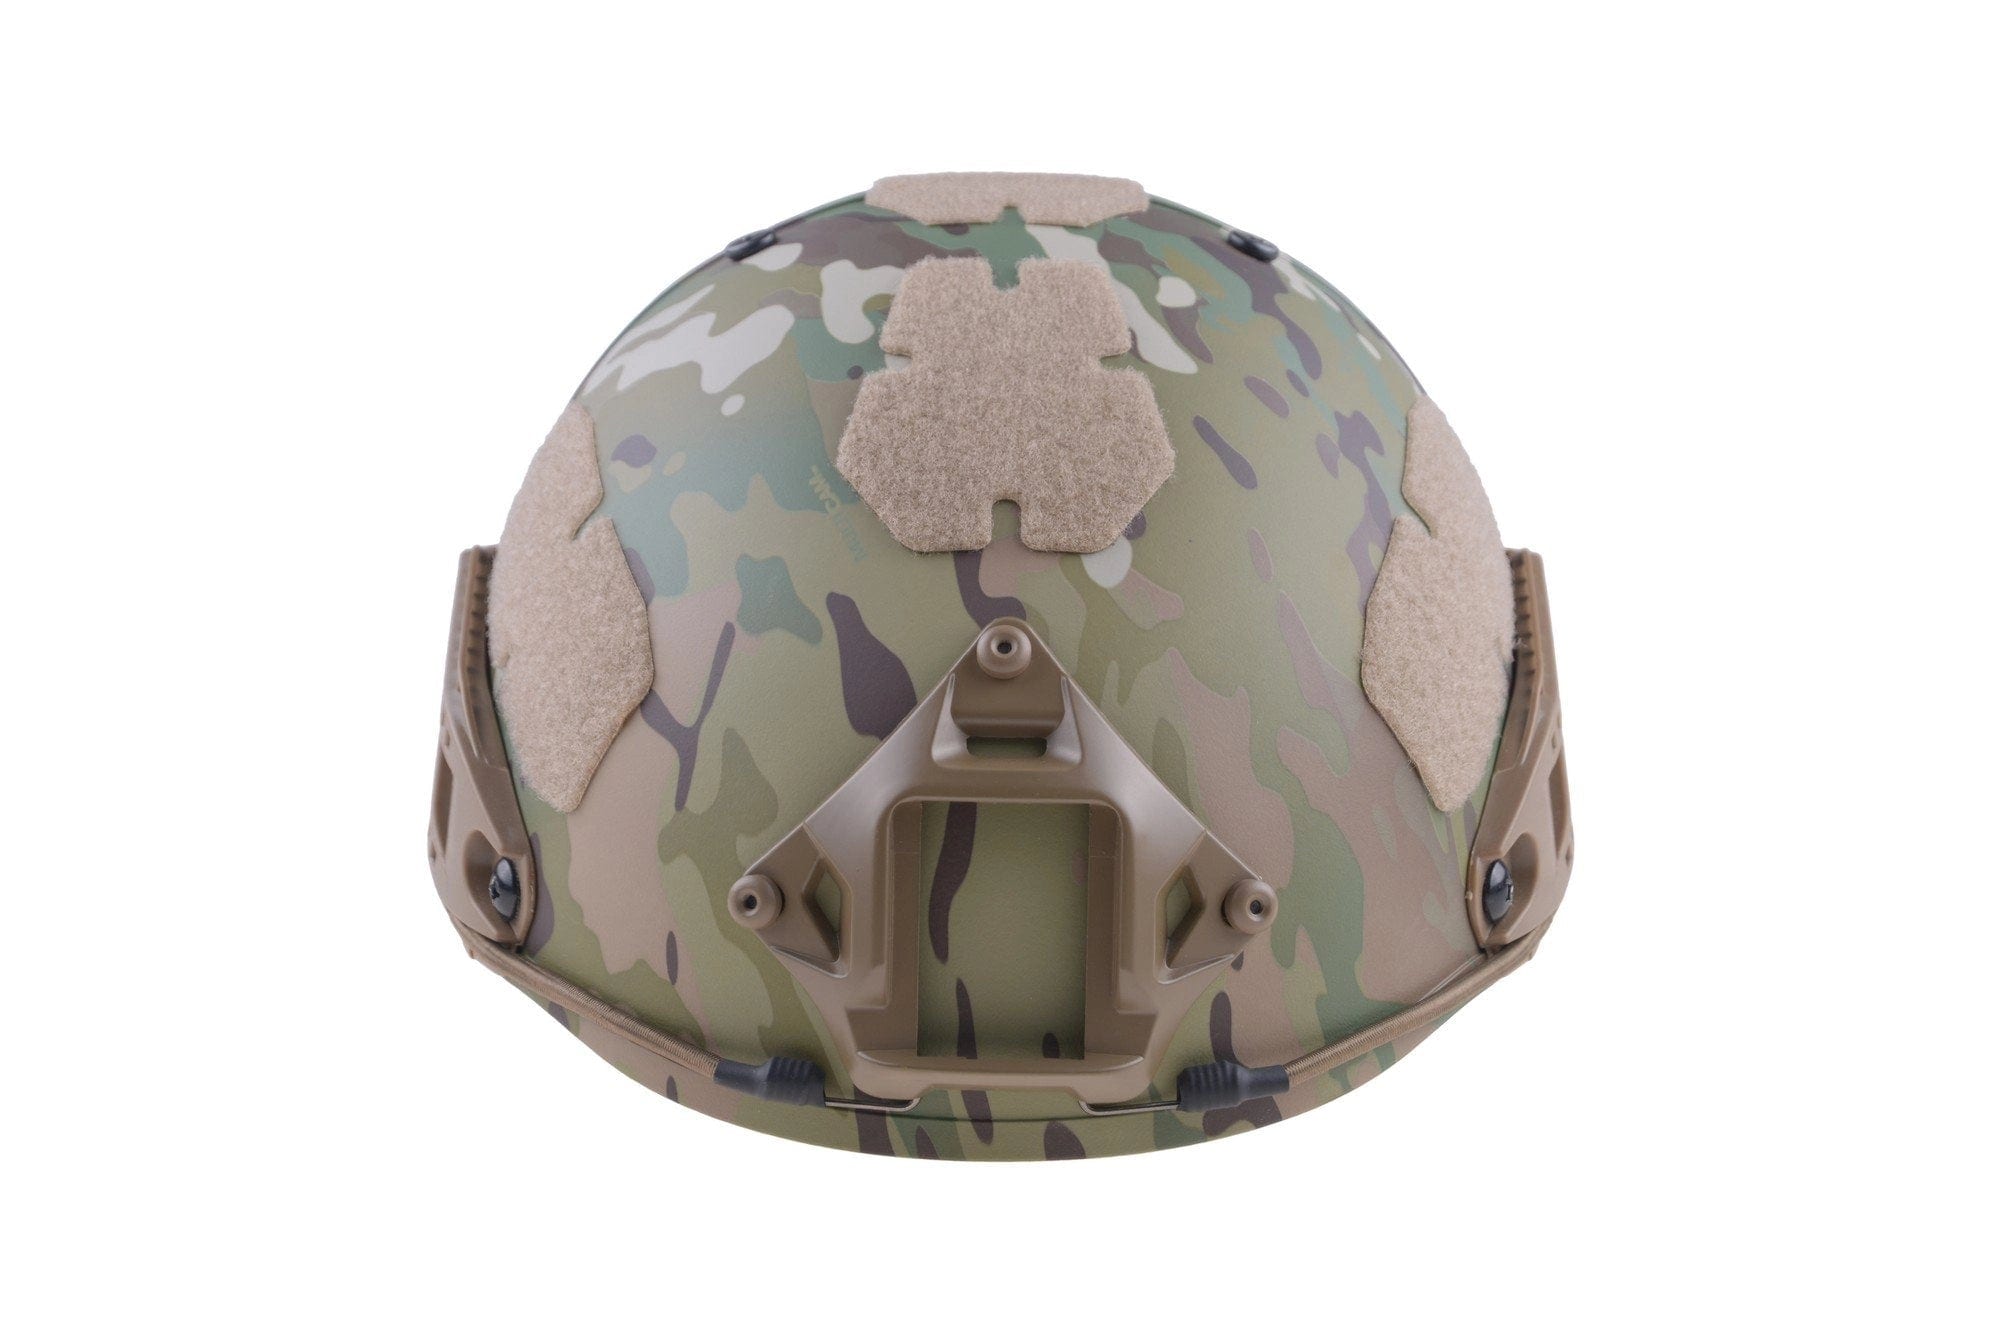 AIR FAST helmet replica - Multicam